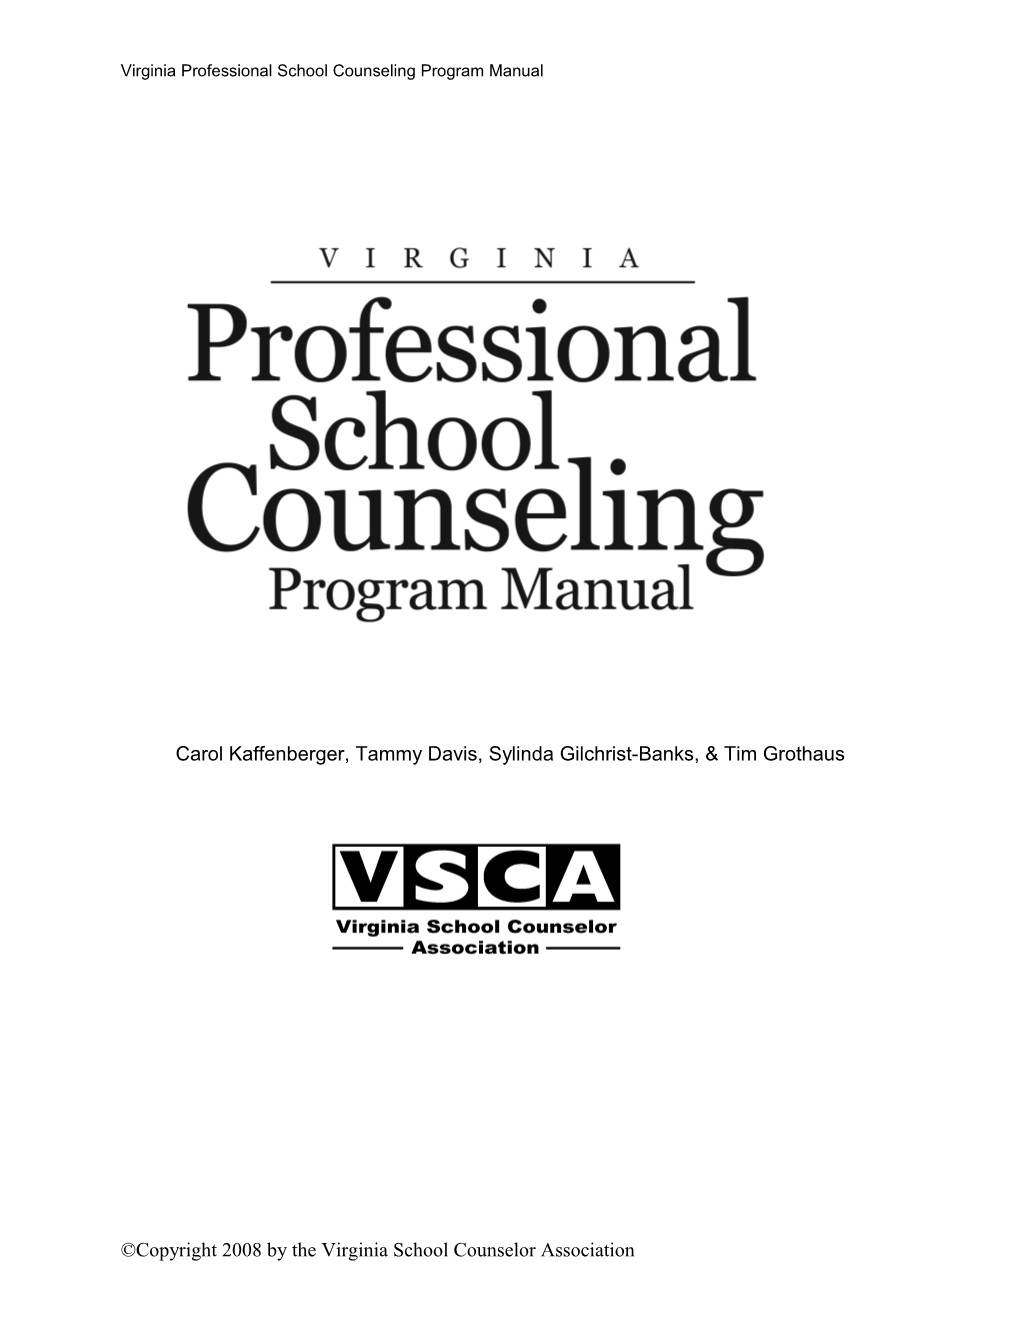 Virginia Model For School Counseling Programs